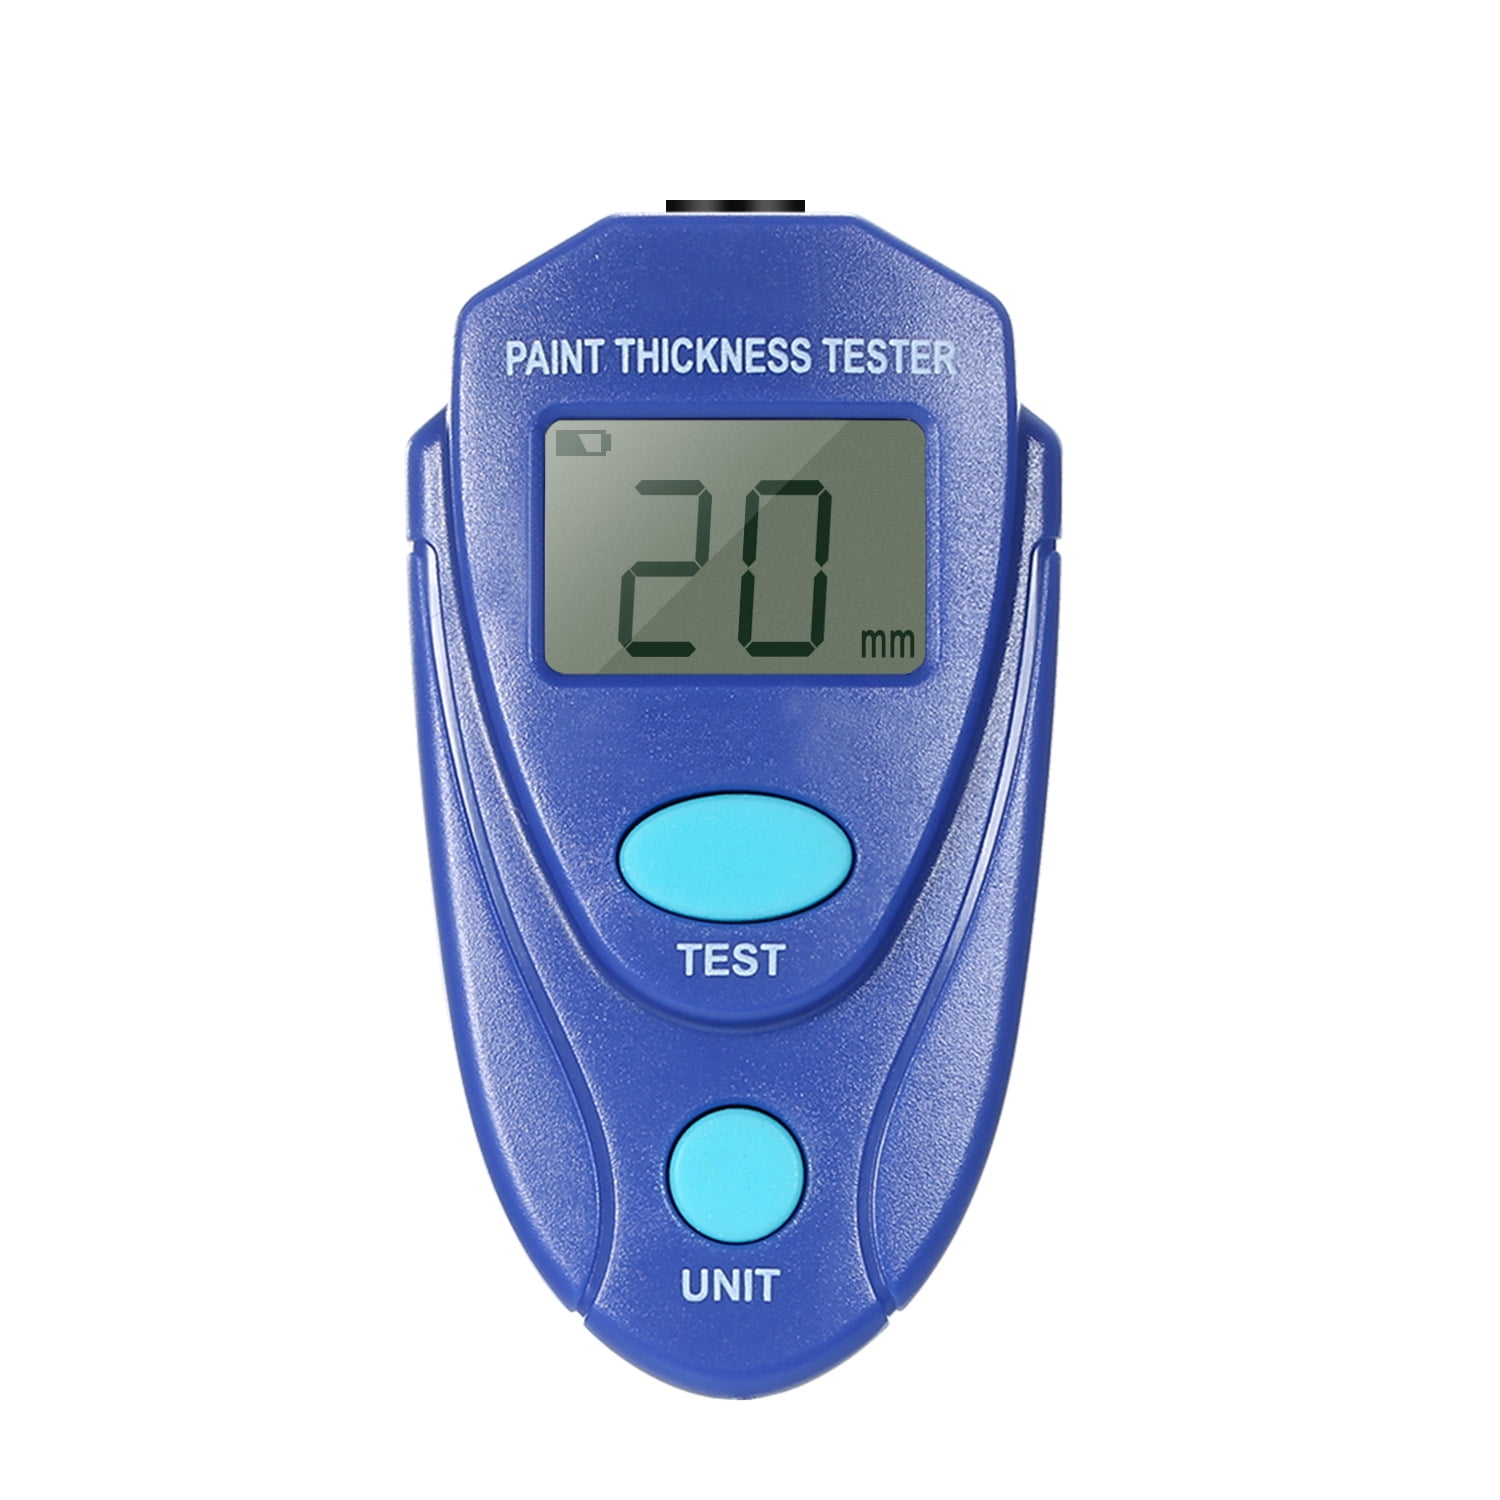 Paint Thickness Tester Professional Mini Digital Coating Meter Gauge LCD Display Paint Measure Tester Tool Instruments